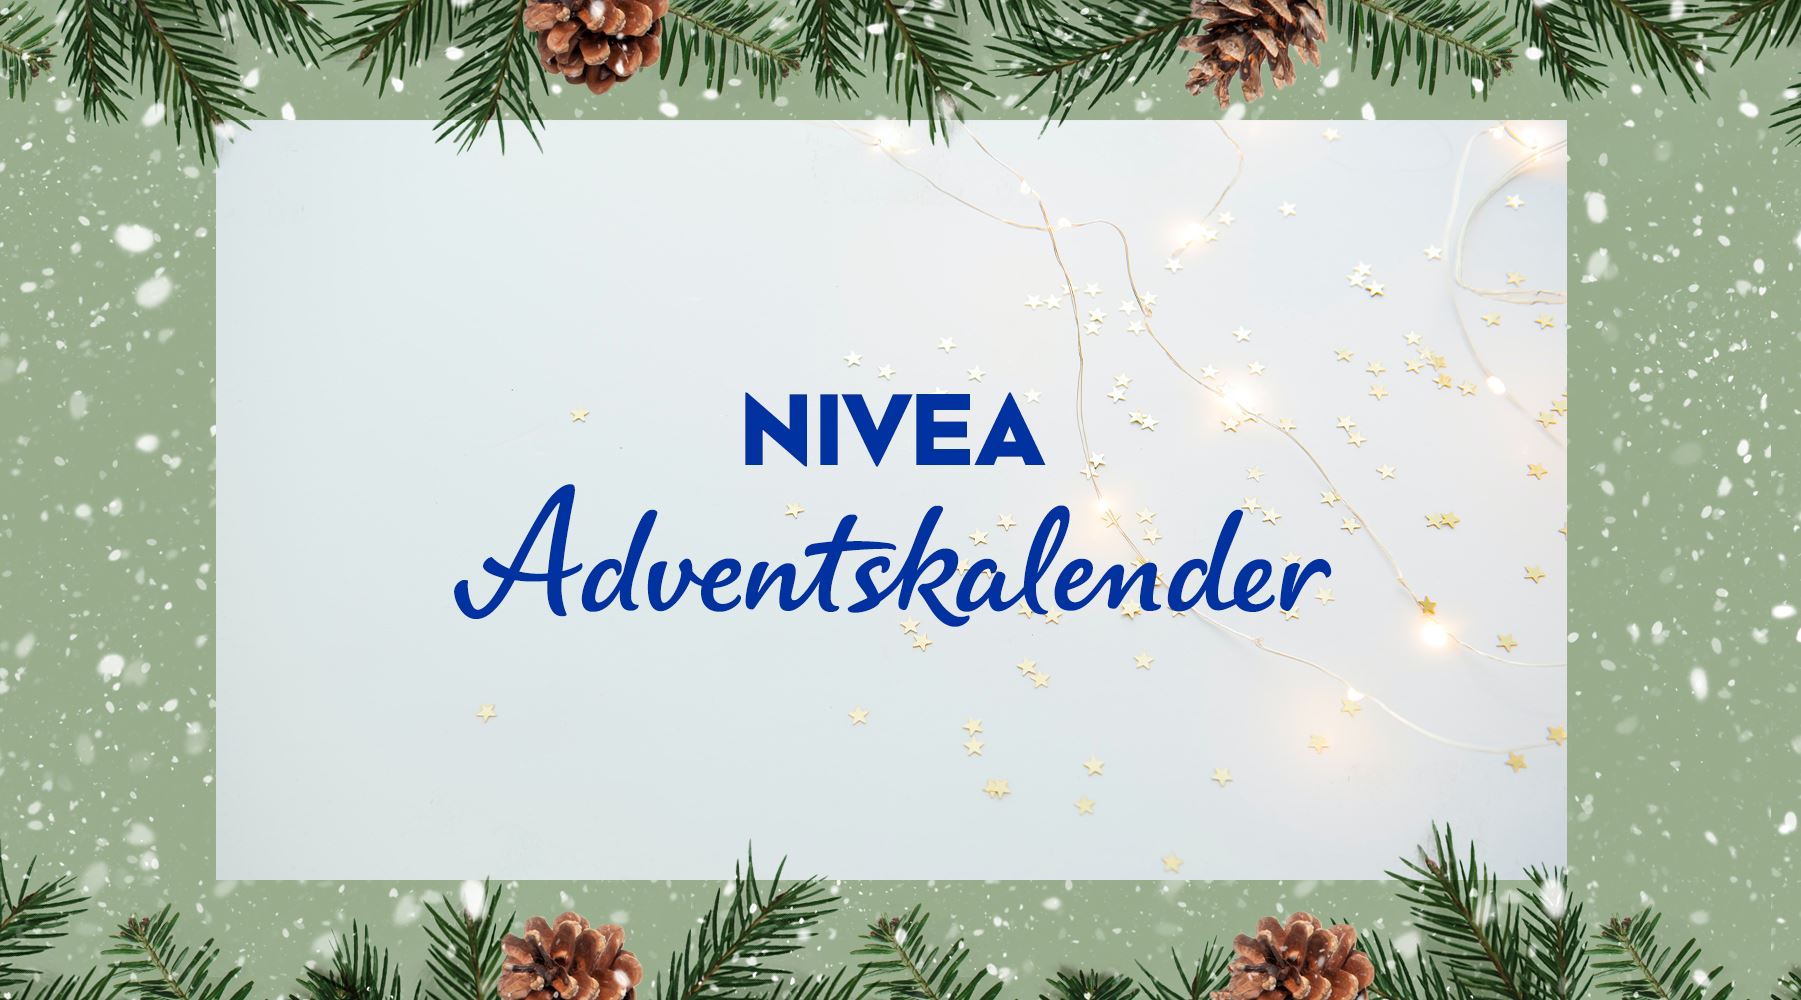 NIVEA Adventskalender